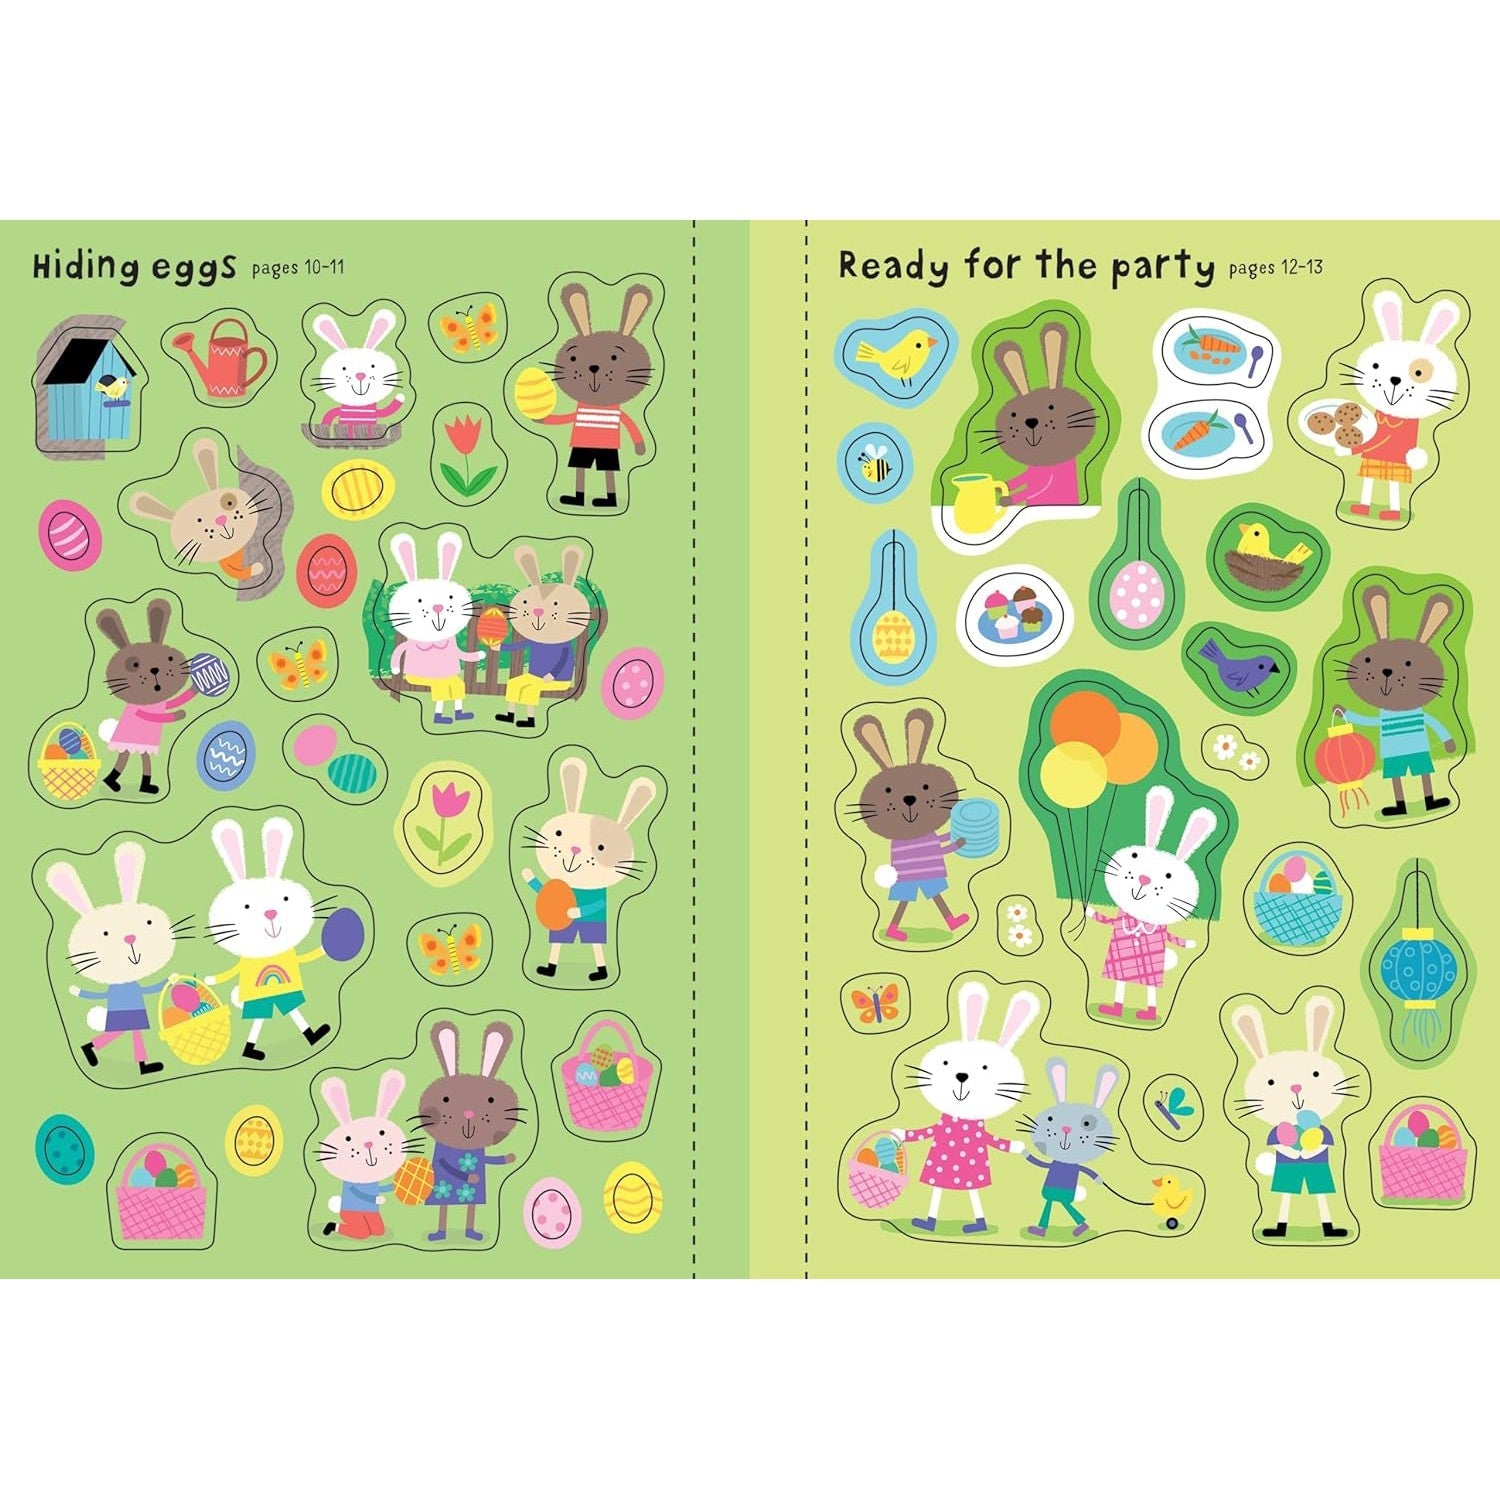 Usborne Books: Little First Stickers - Easter Bunnies (Paperback Book)-HARPER COLLINS PUBLISHERS-Little Giant Kidz